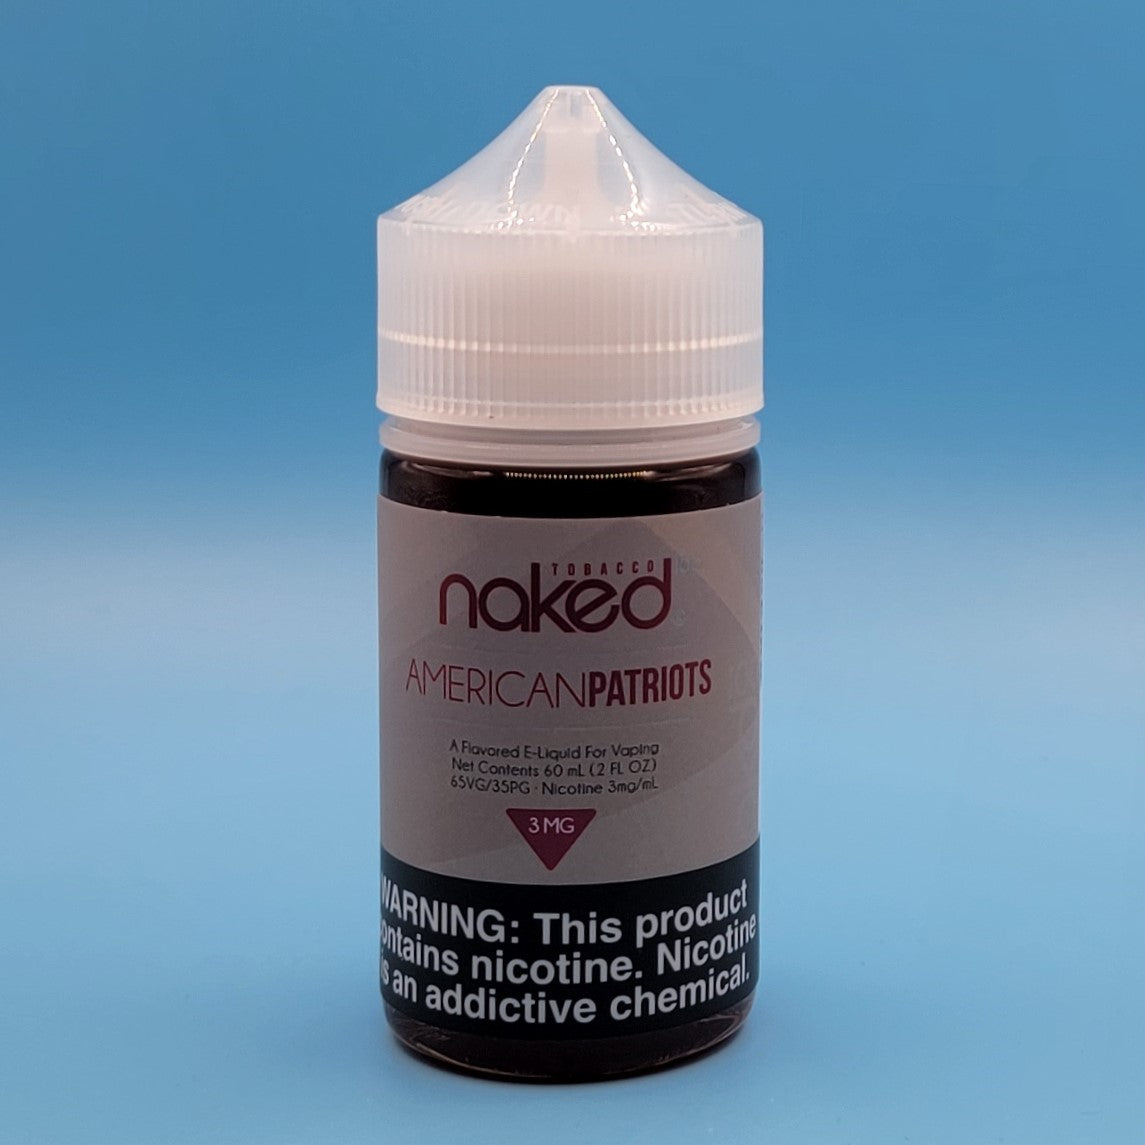 Naked E-Liquid